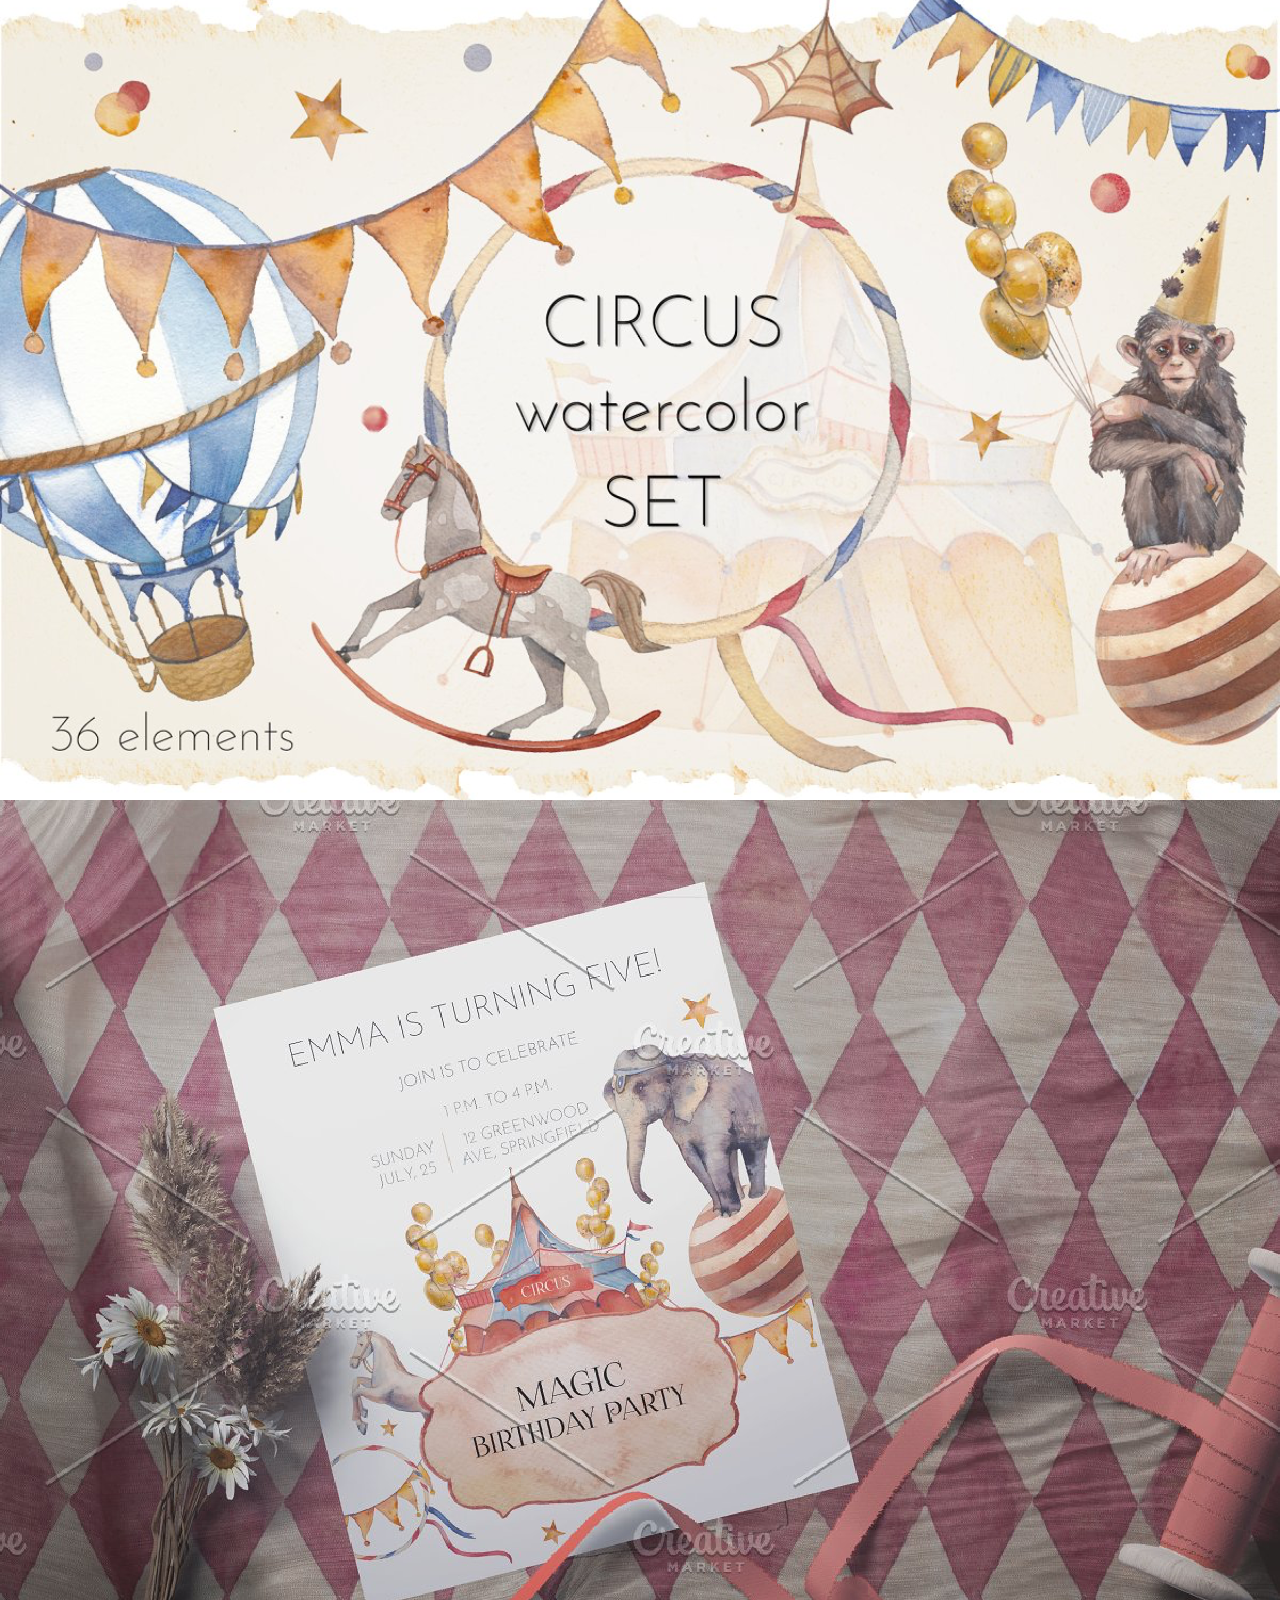 Circus watercolor set pinterest image preview.